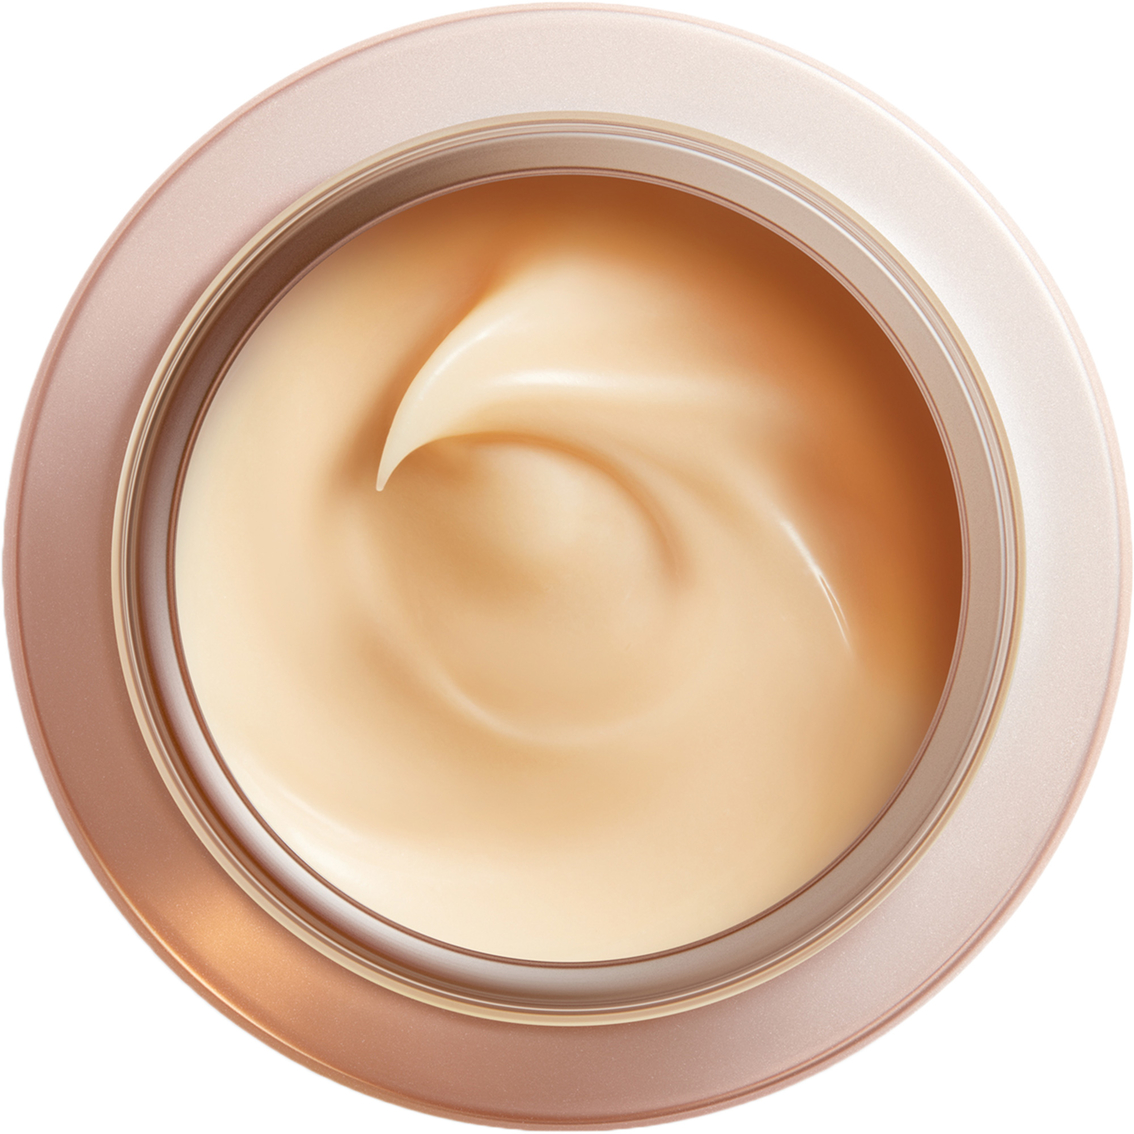 Shiseido Benefiance Overnight Wrinkle Resisting Cream - Image 2 of 3